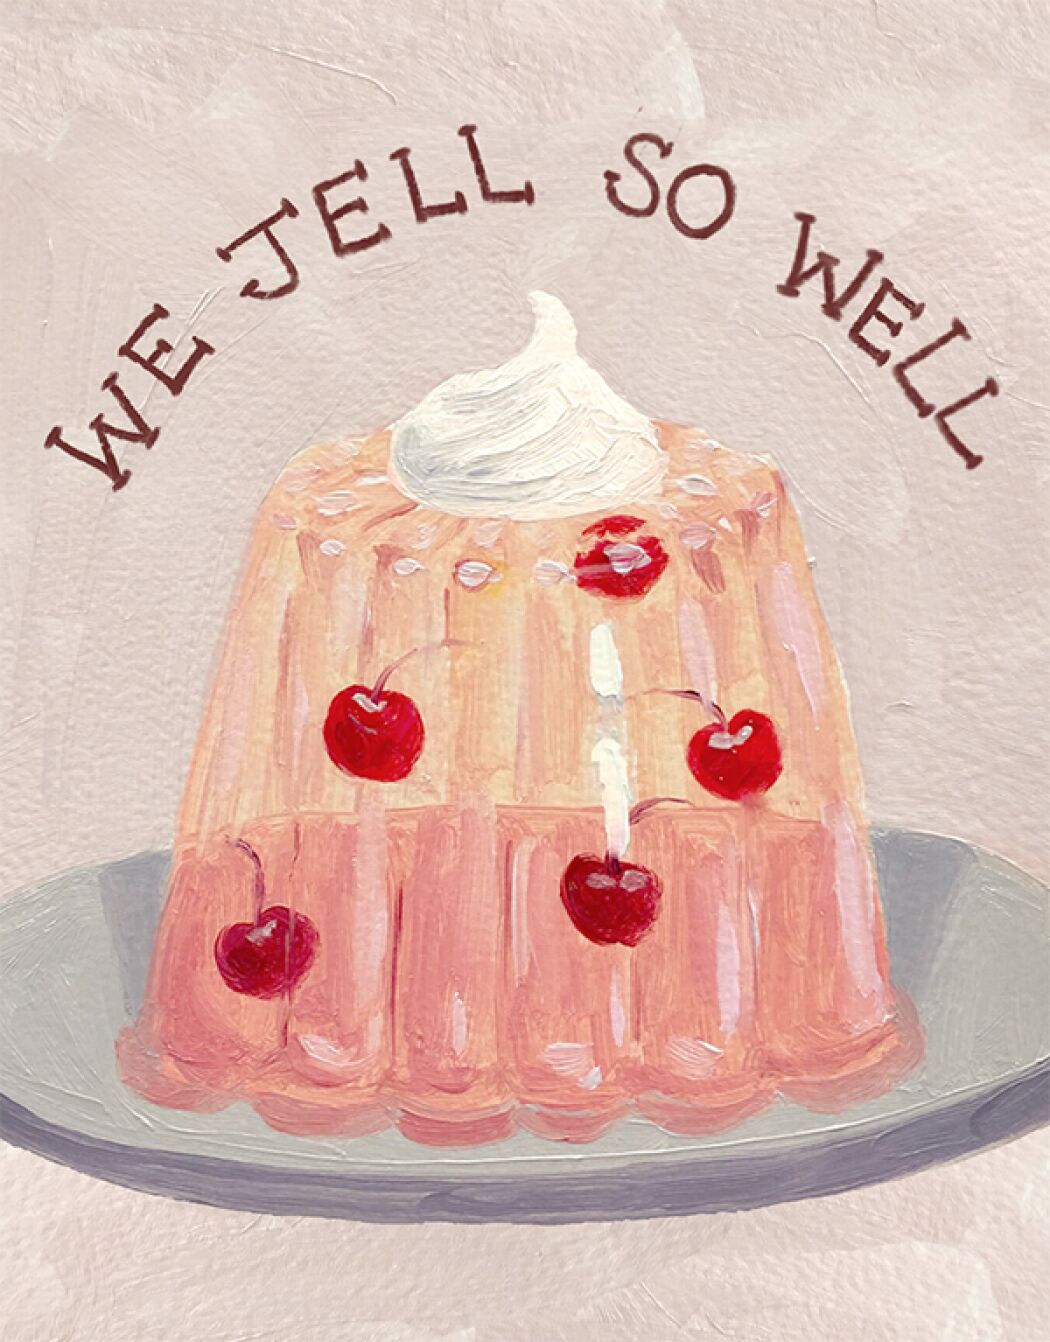 Food and lifestyle dessert illustration by Christina Gliha 